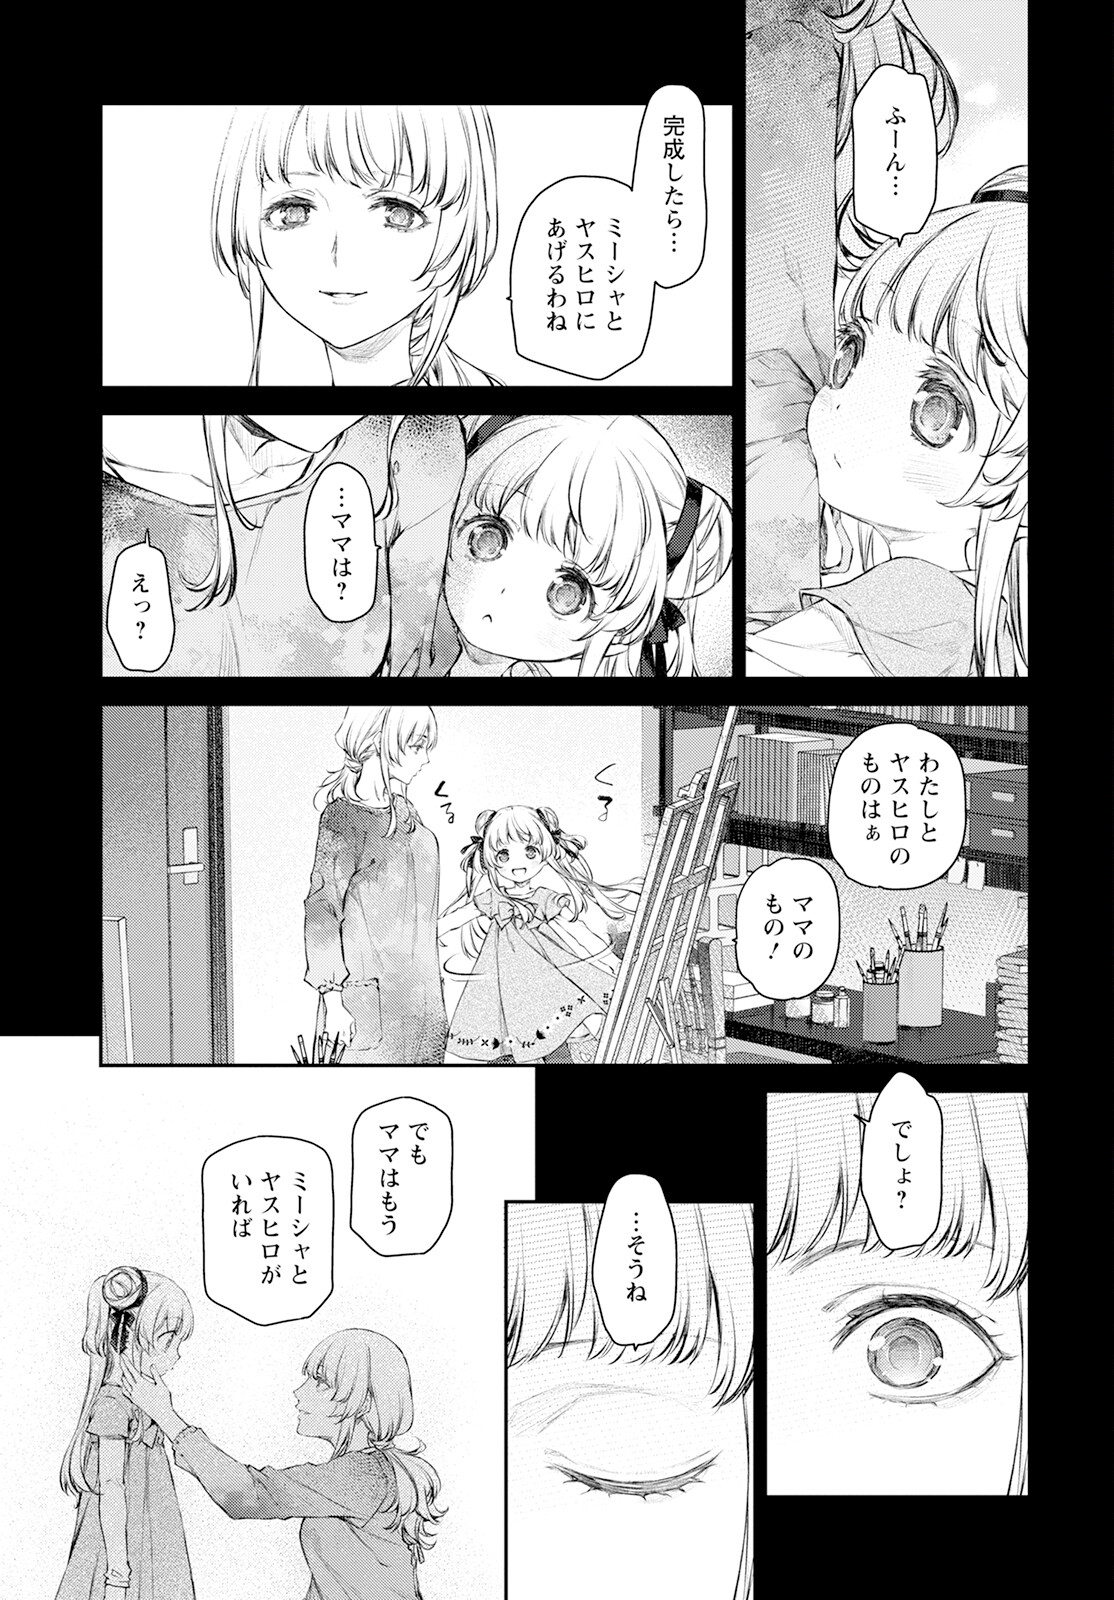 Uchi no Maid ga Uzasugiru! - Chapter 57 - Page 3